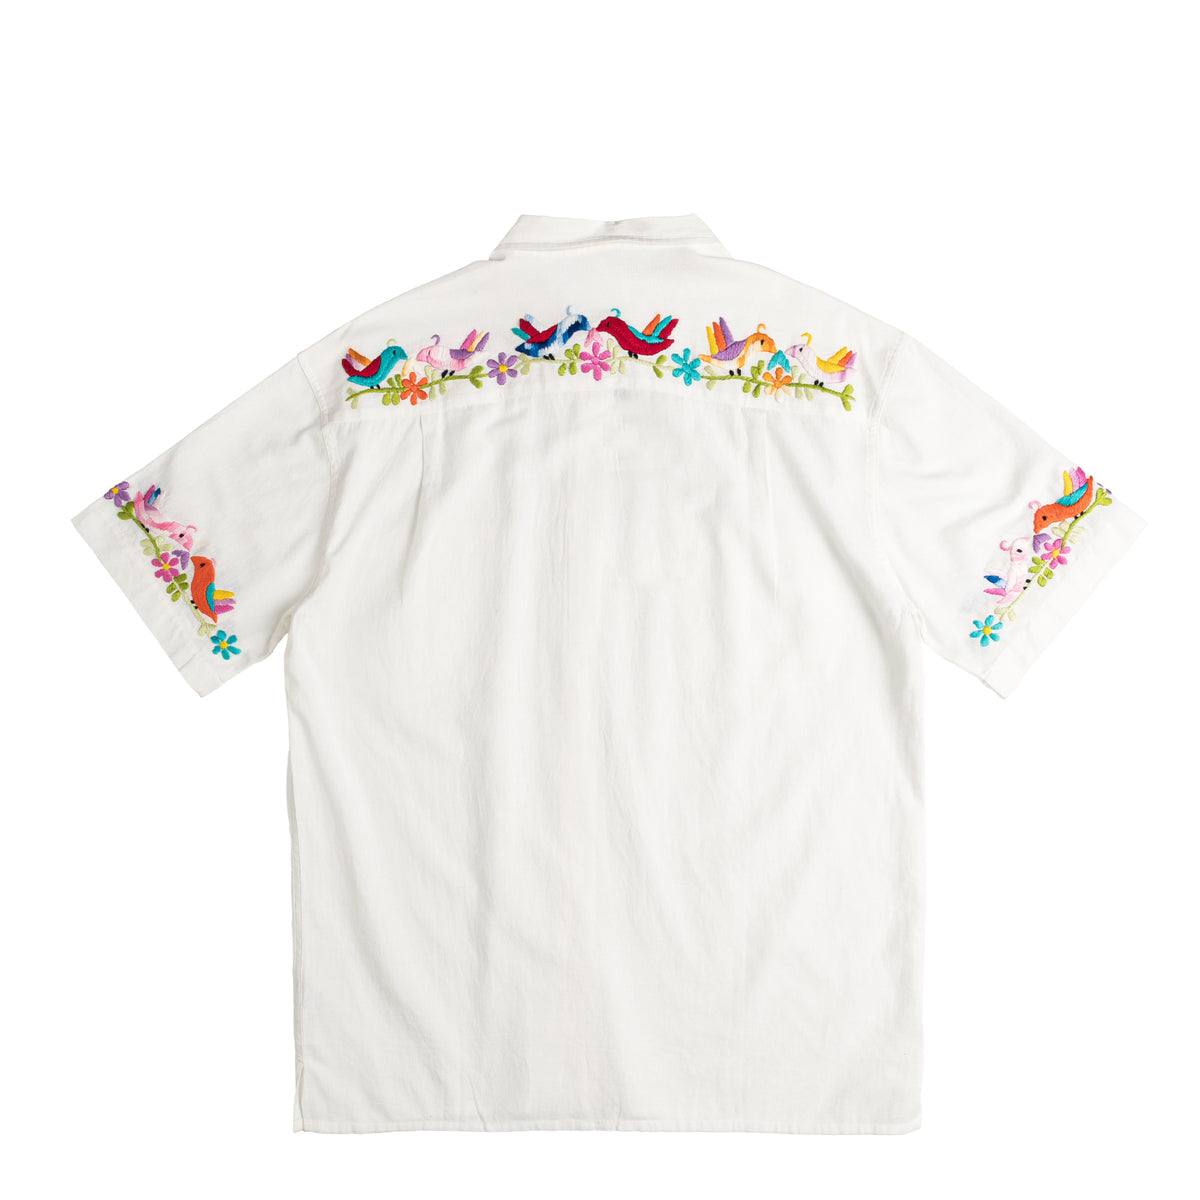 YMC Mitchum Shirt » Buy online now!